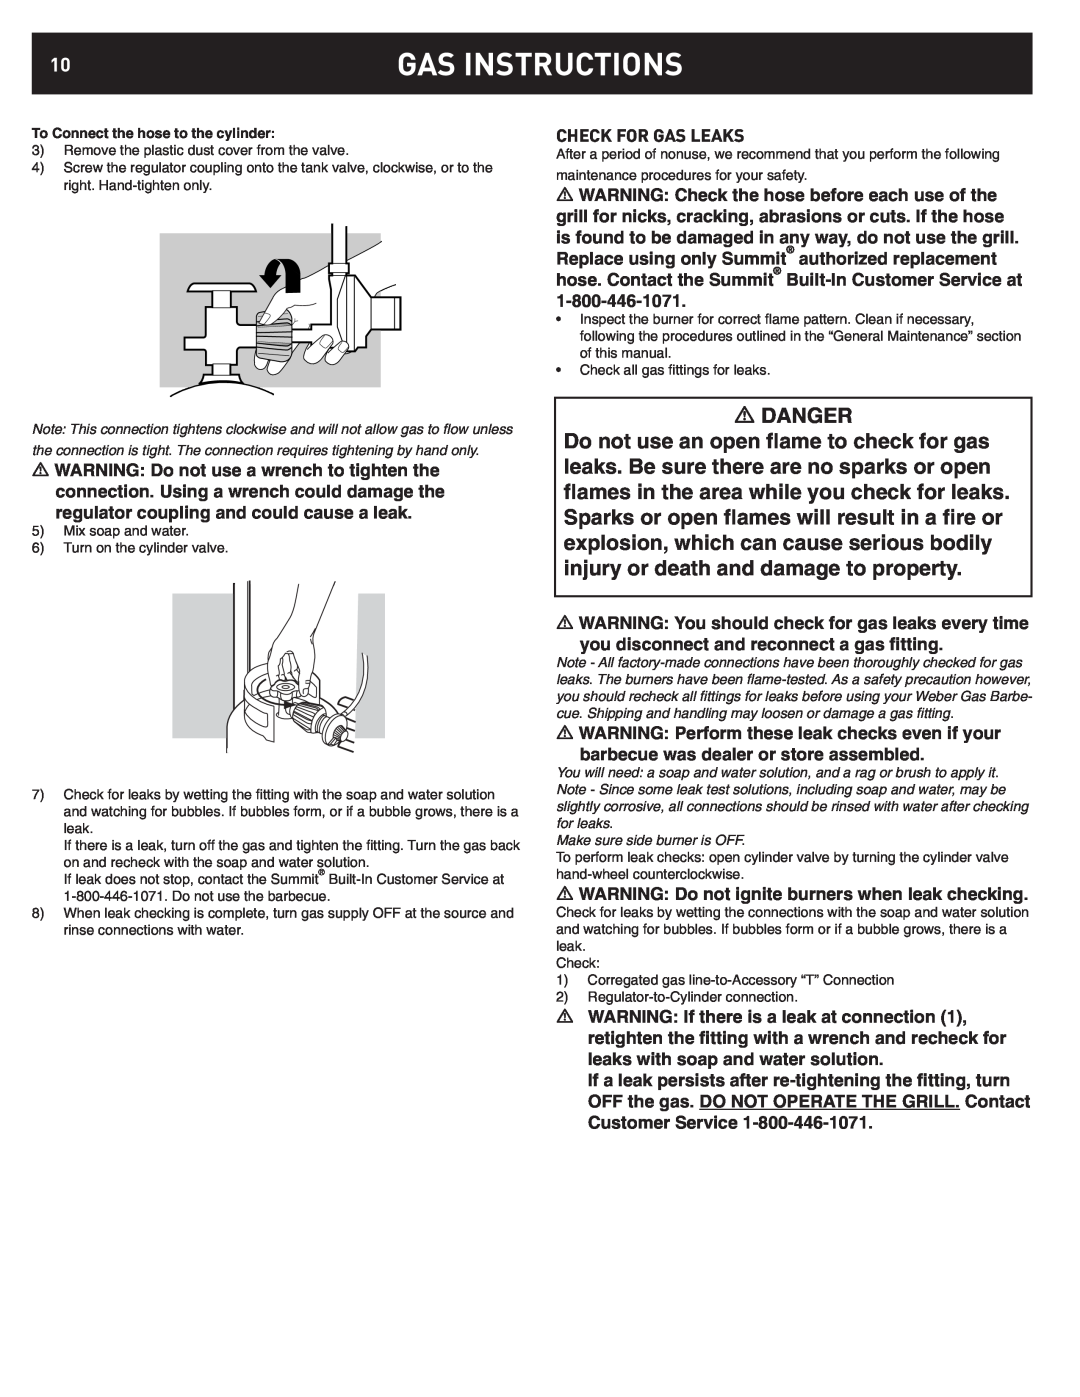 Weber 42376 manual Check For Gas Leaks, Gas Instructions, Danger 